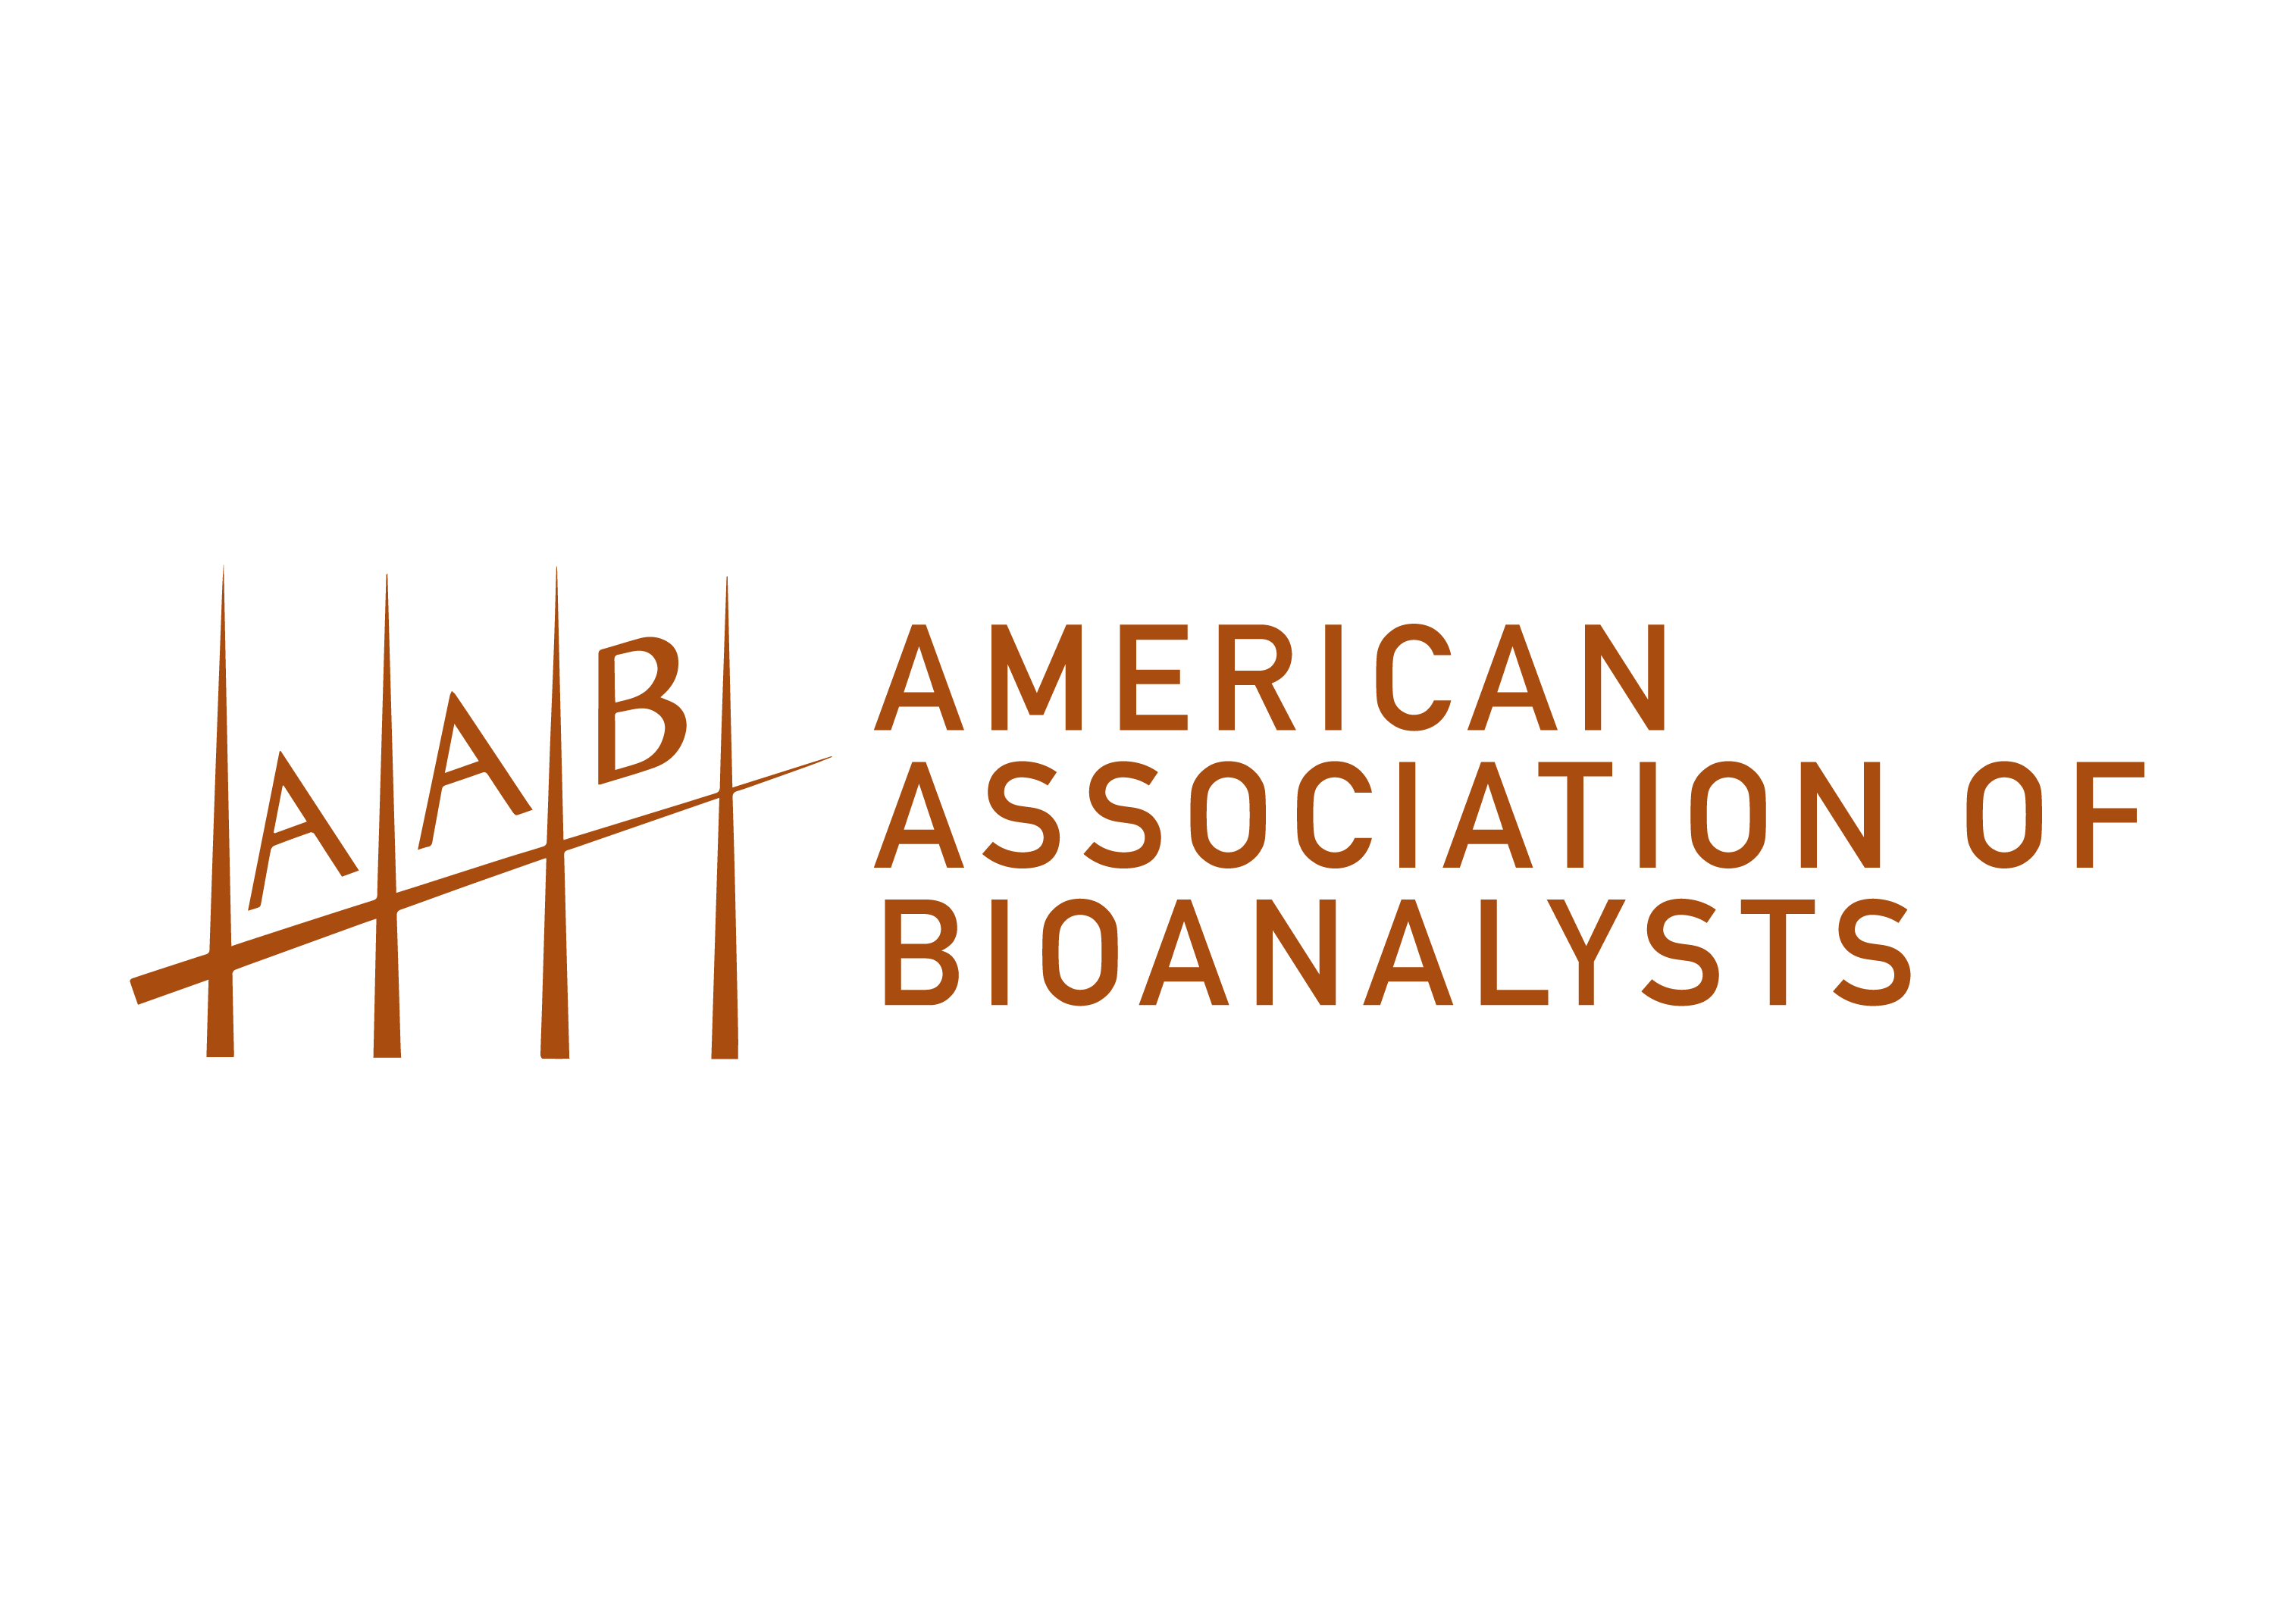 American Association of Bioanalysts